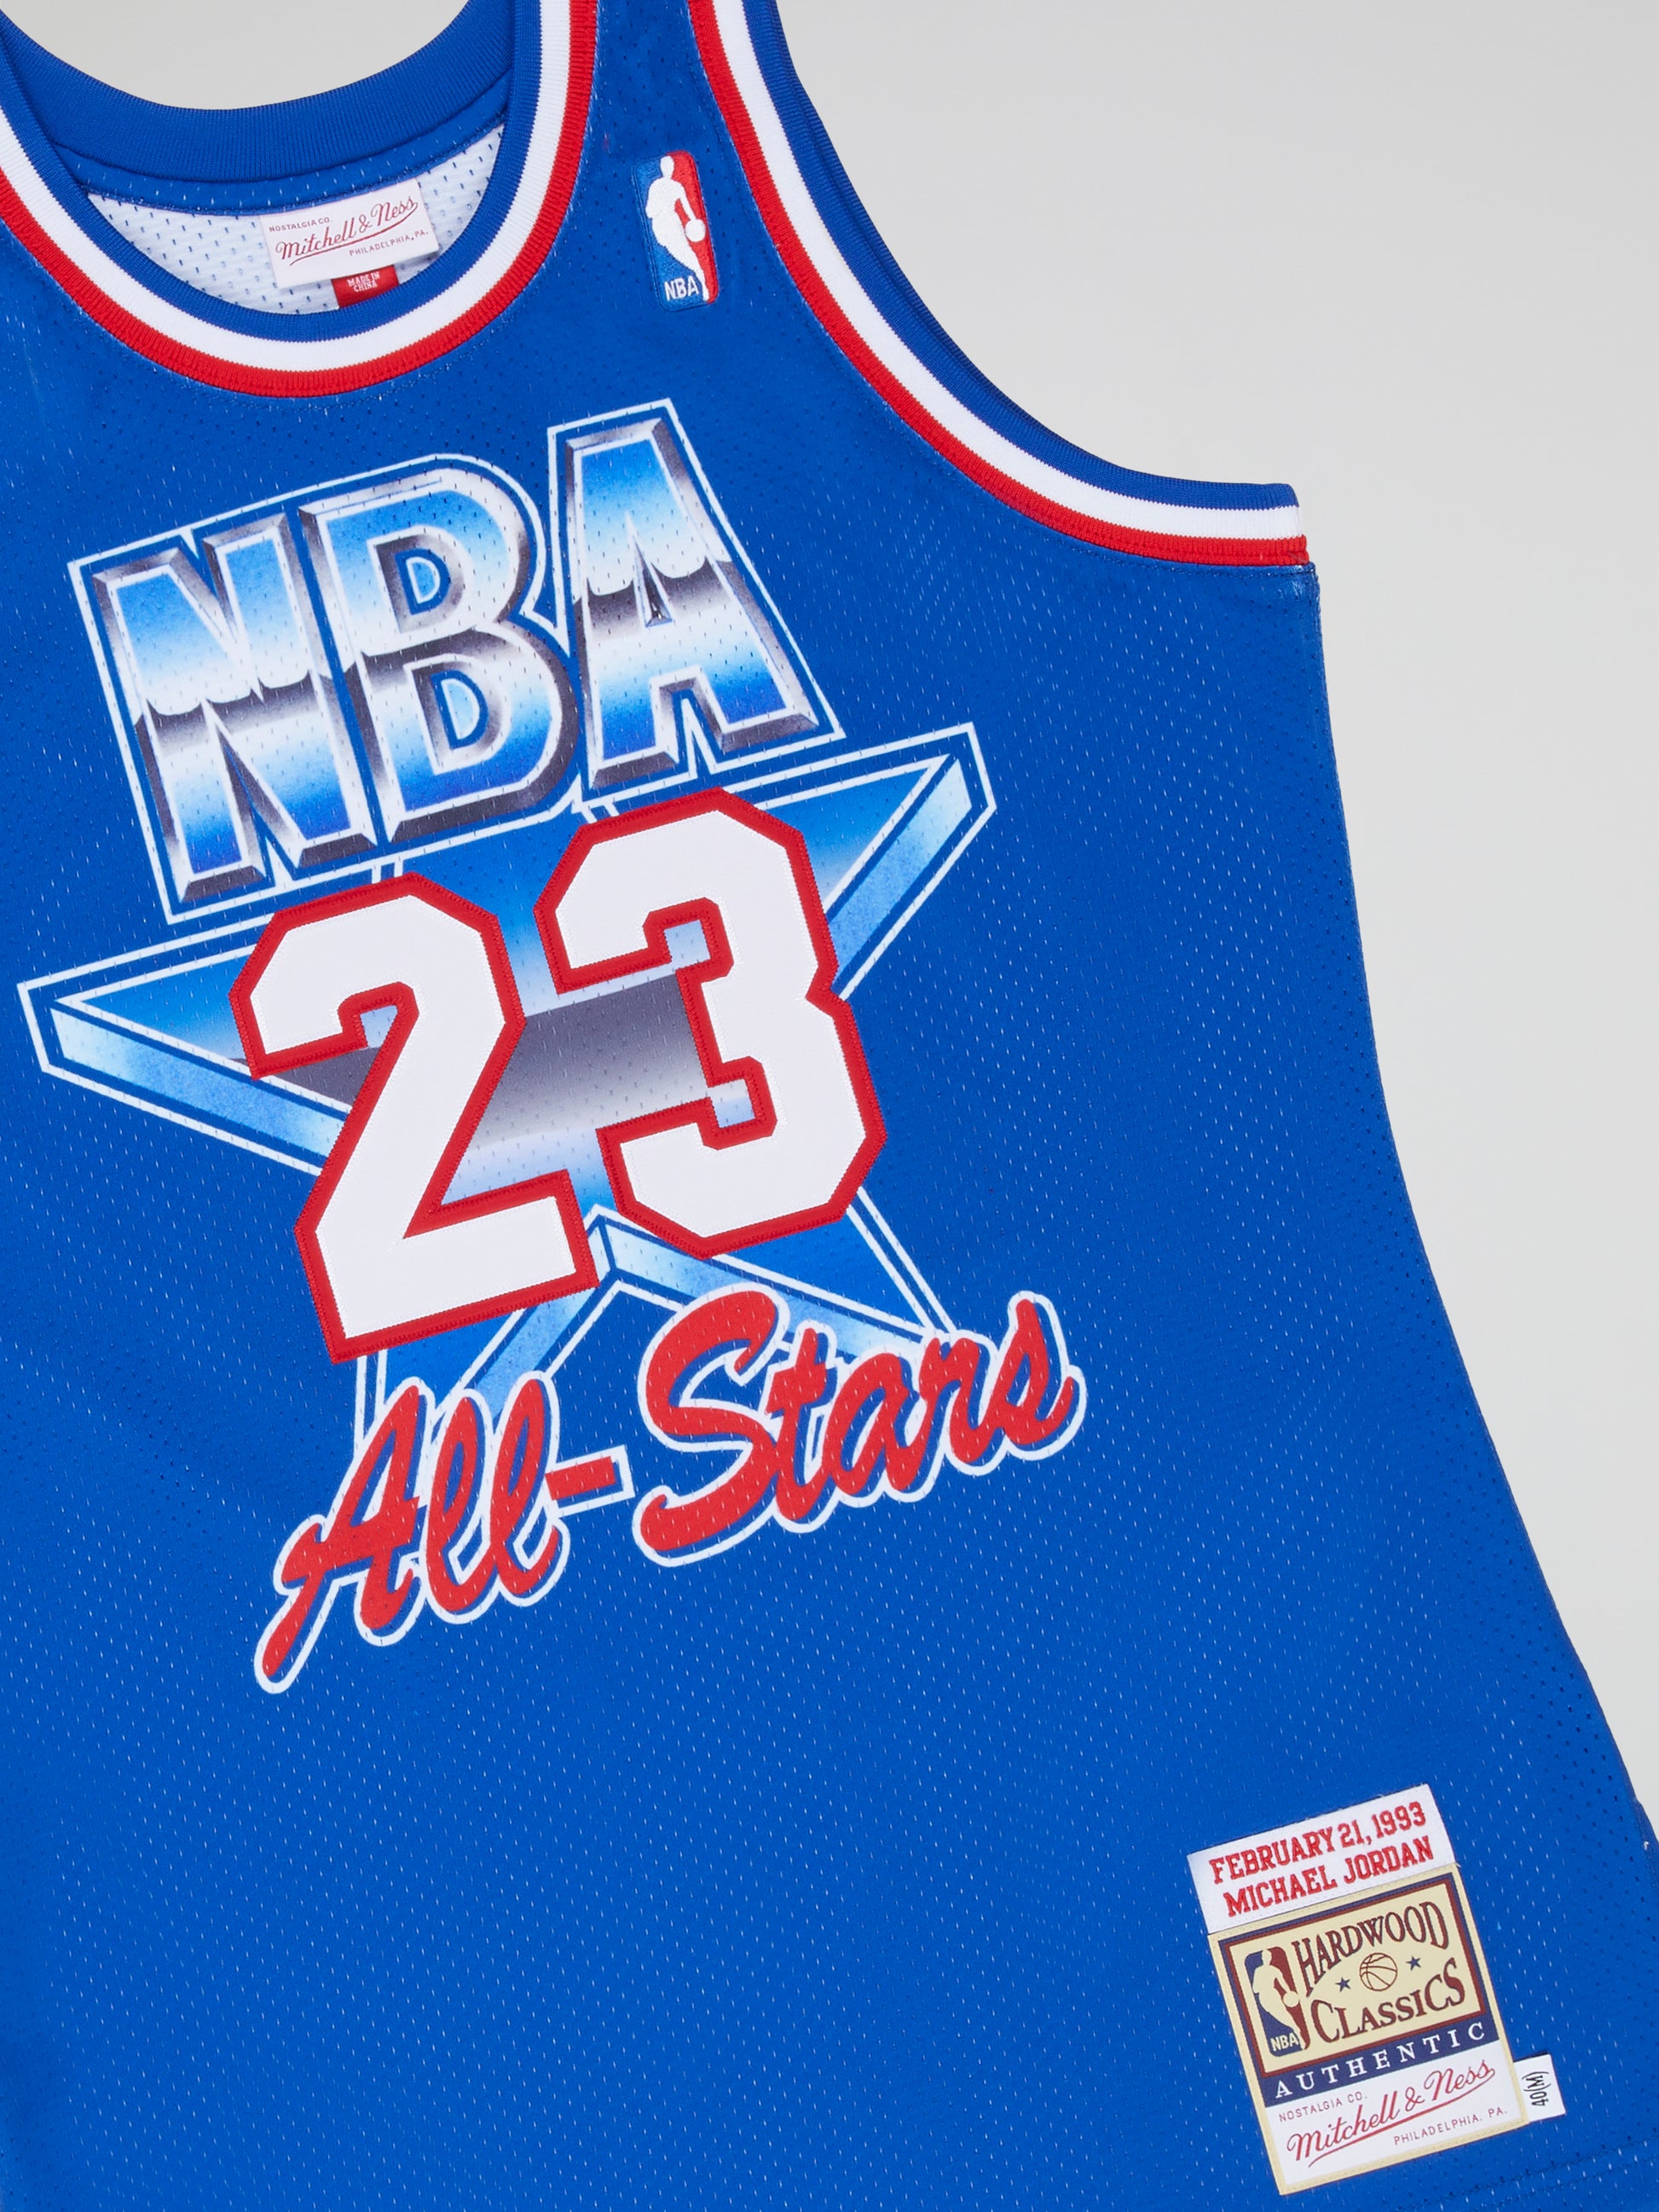 Michael Jordan Signed 1993 NBA All-Star Authentic Mitchell & Ness